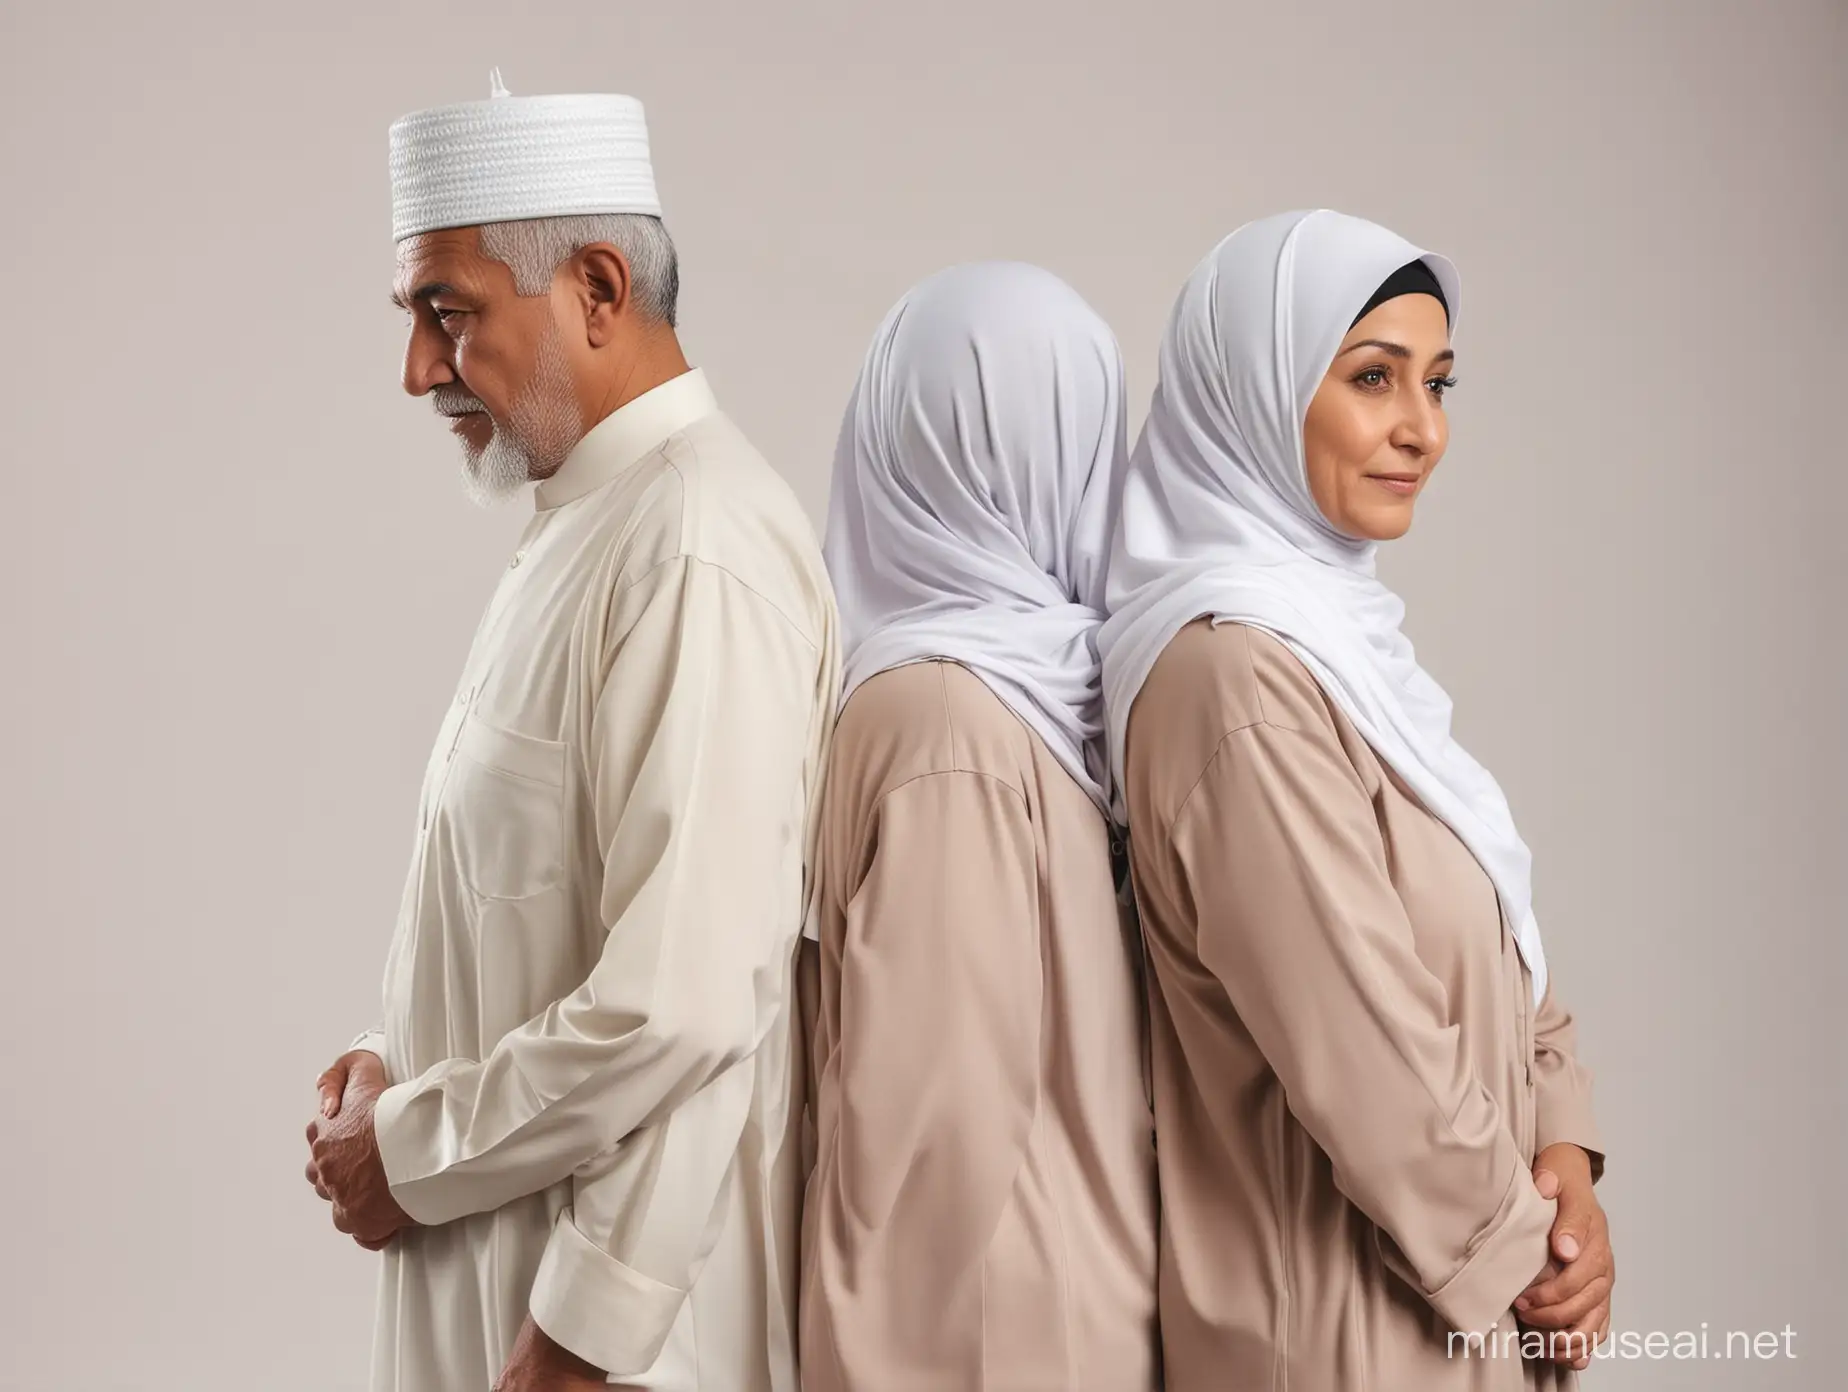 Elderly Muslim Grandparents in Traditional Attire Facing Away